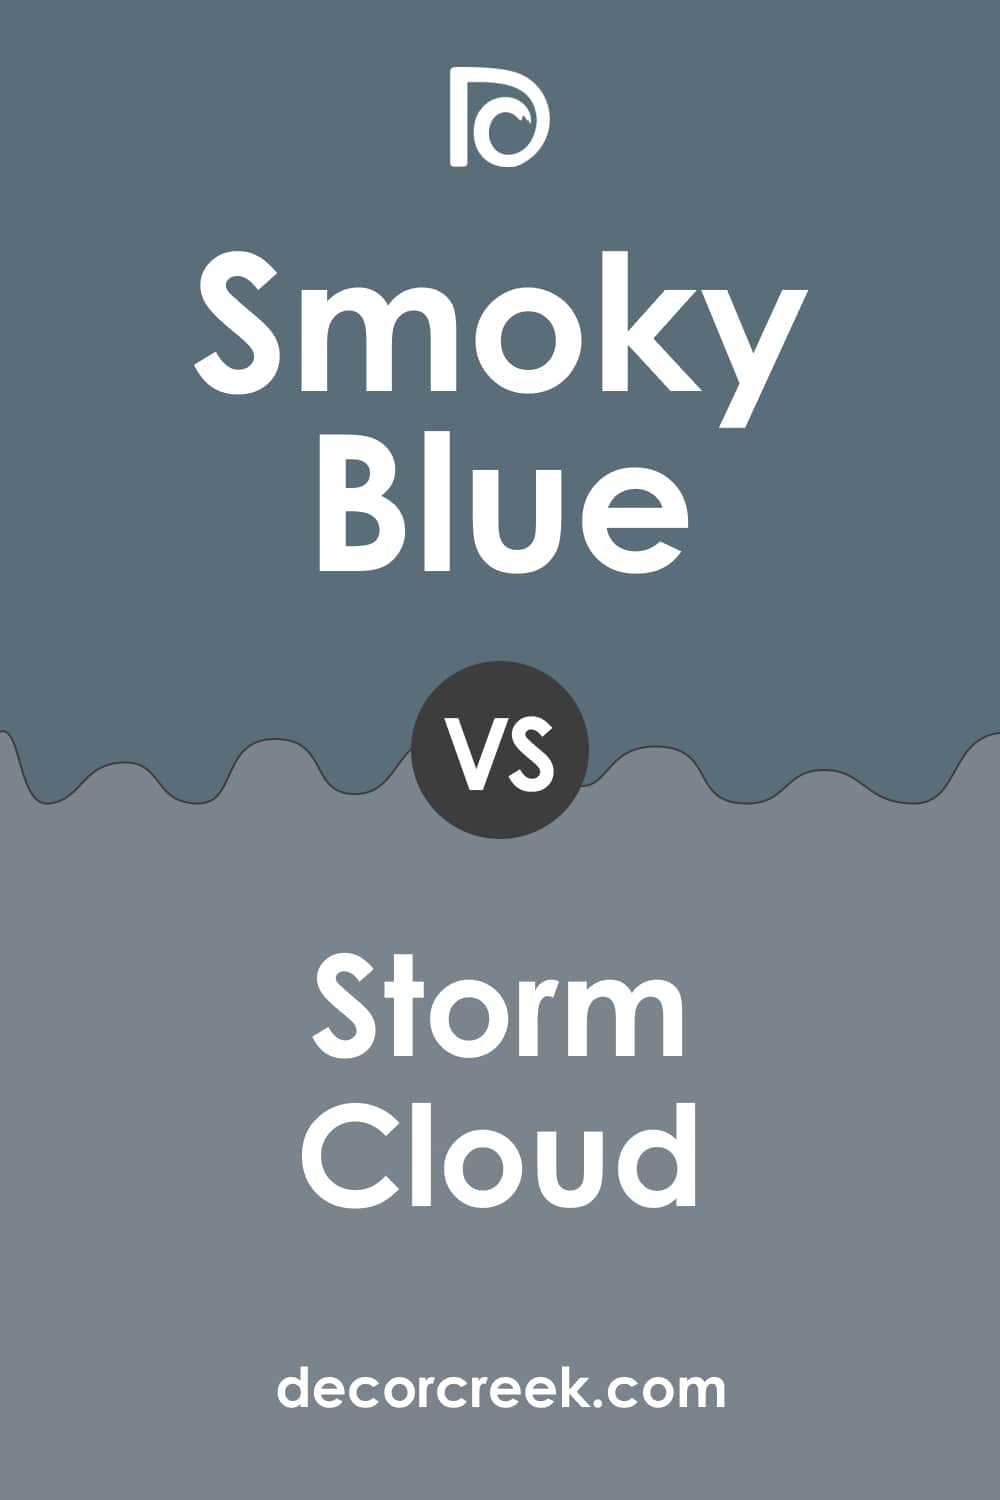 Smoky Blue vs. Storm Cloud